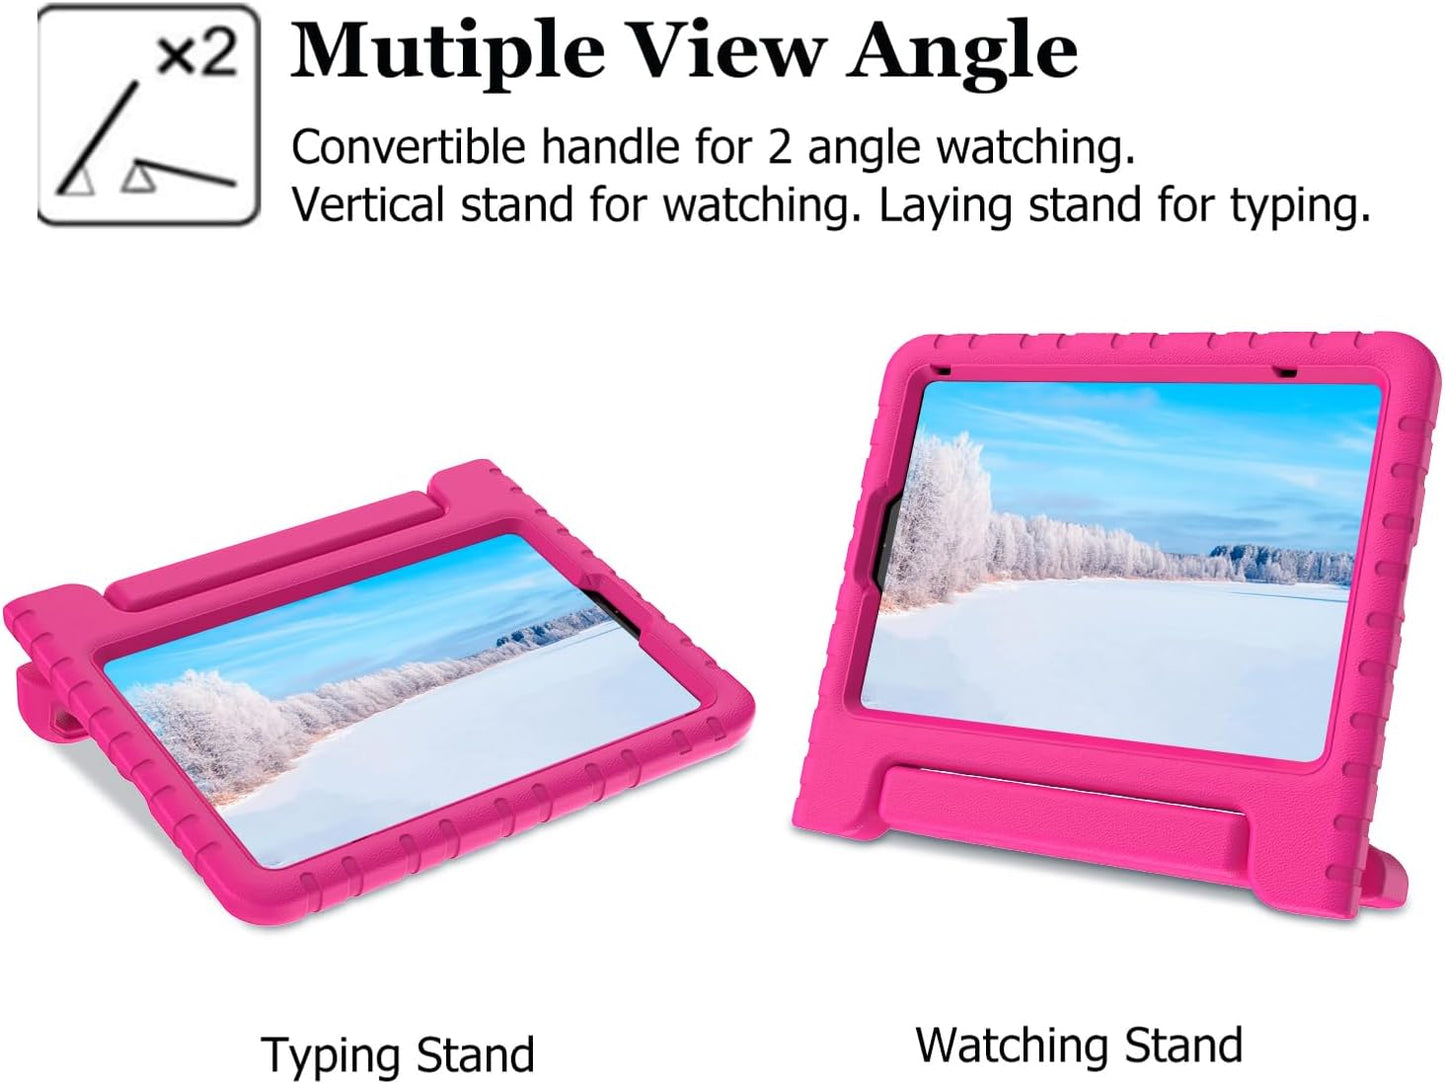 Kids Case Compatible for Ipad Mini 1 2 3 - Light Weight Shock Proof Handle Stand Kids Compatible for Ipad Mini, Ipad Mini 3Rd Generation, Ipad Mini 2 with Retina Display - Black